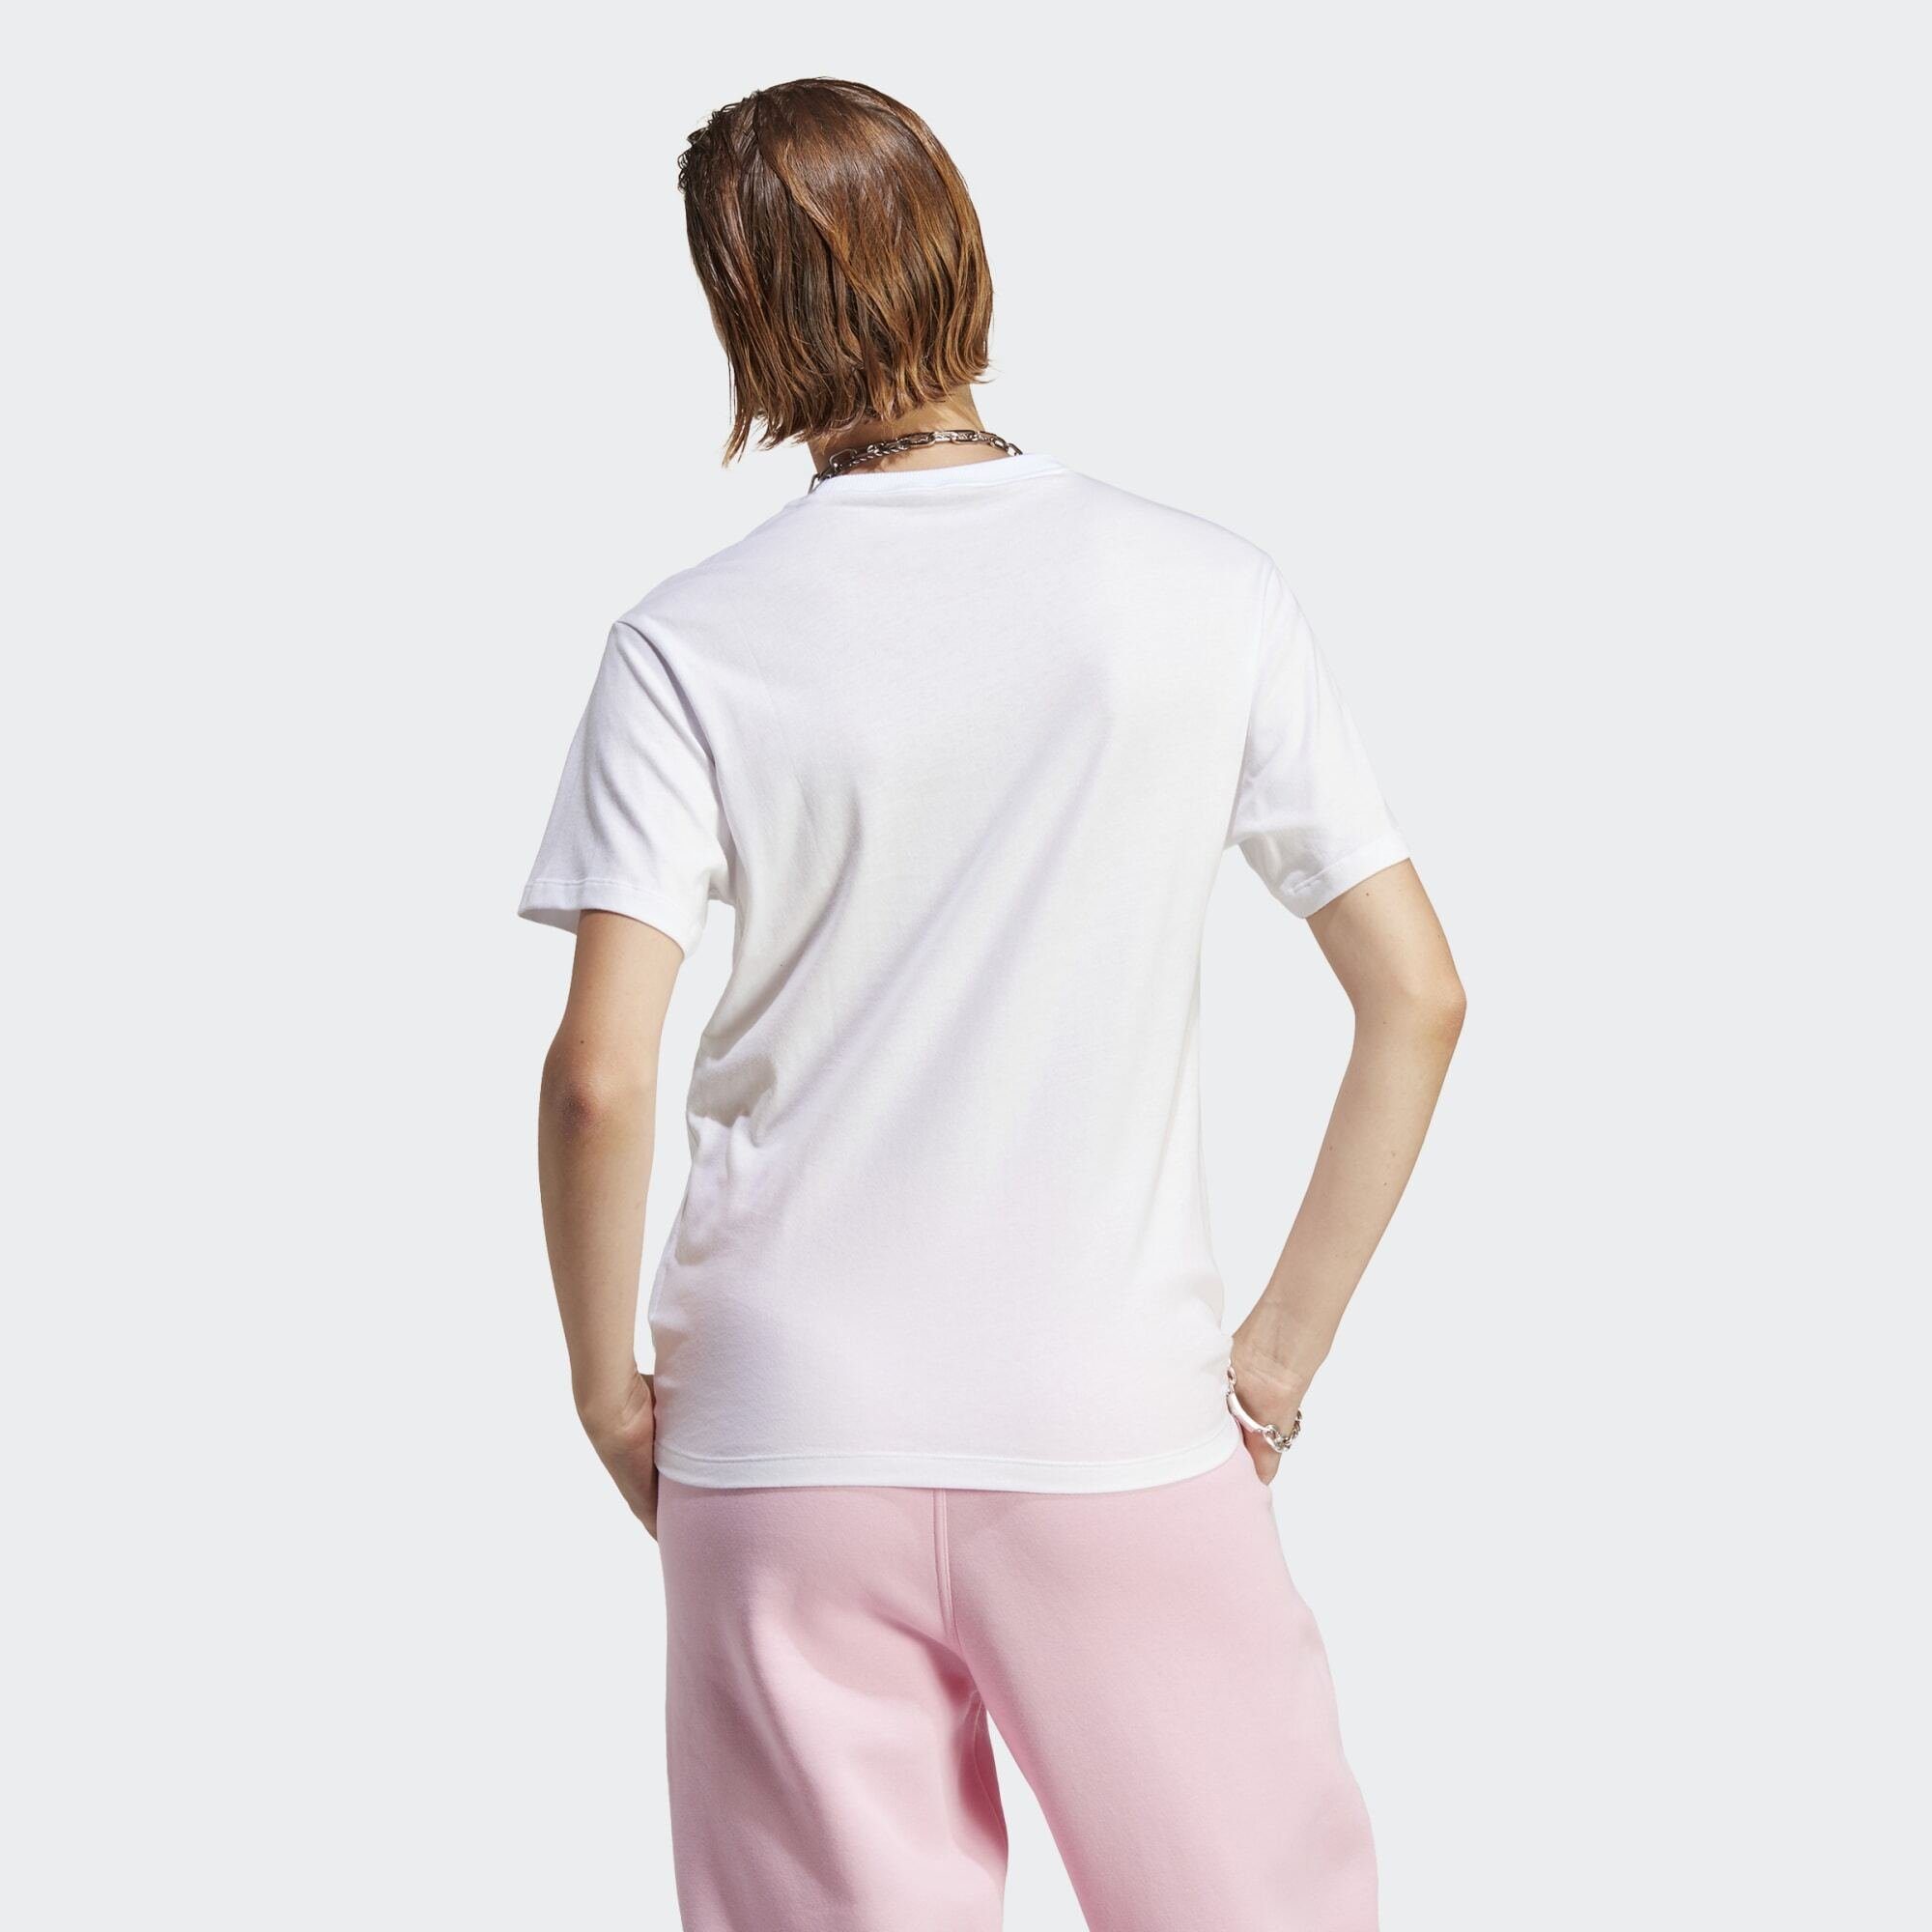 adidas Originals T-Shirt ADICOLOR ESSENTIALS White T-SHIRT REGULAR